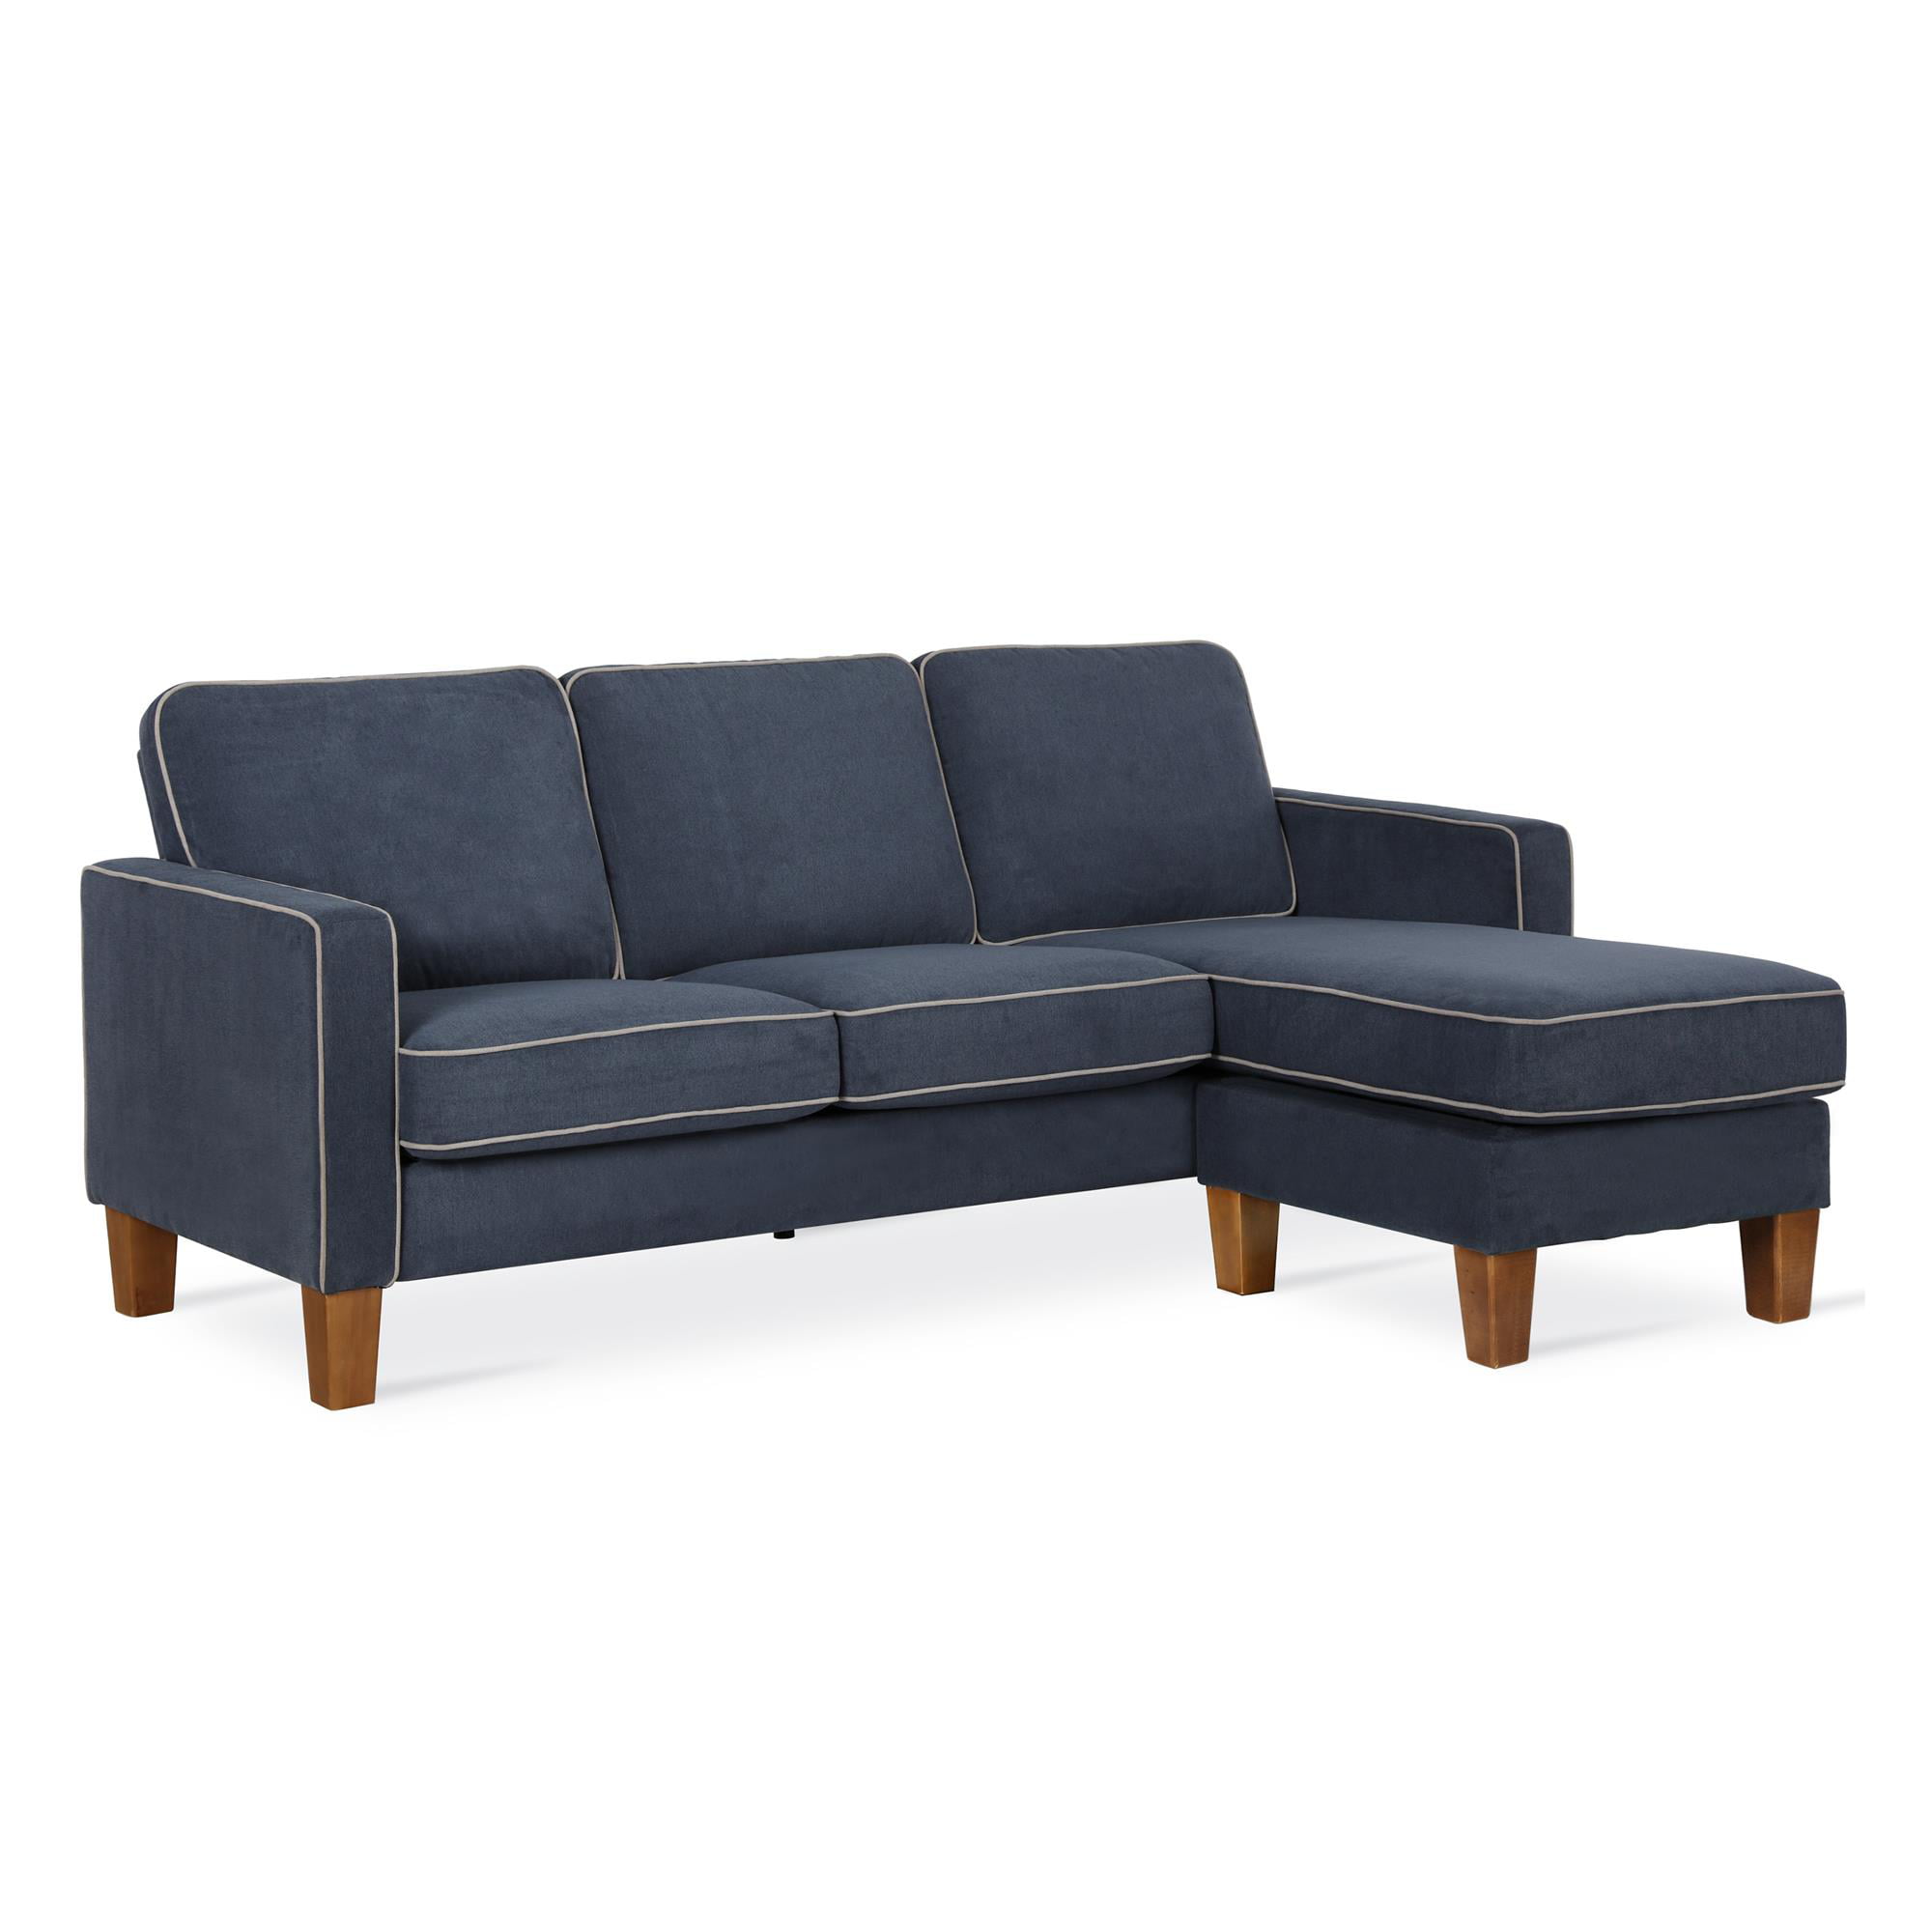 Novogratz Bowen Sectional Sofa with Contrast Welting, Blue